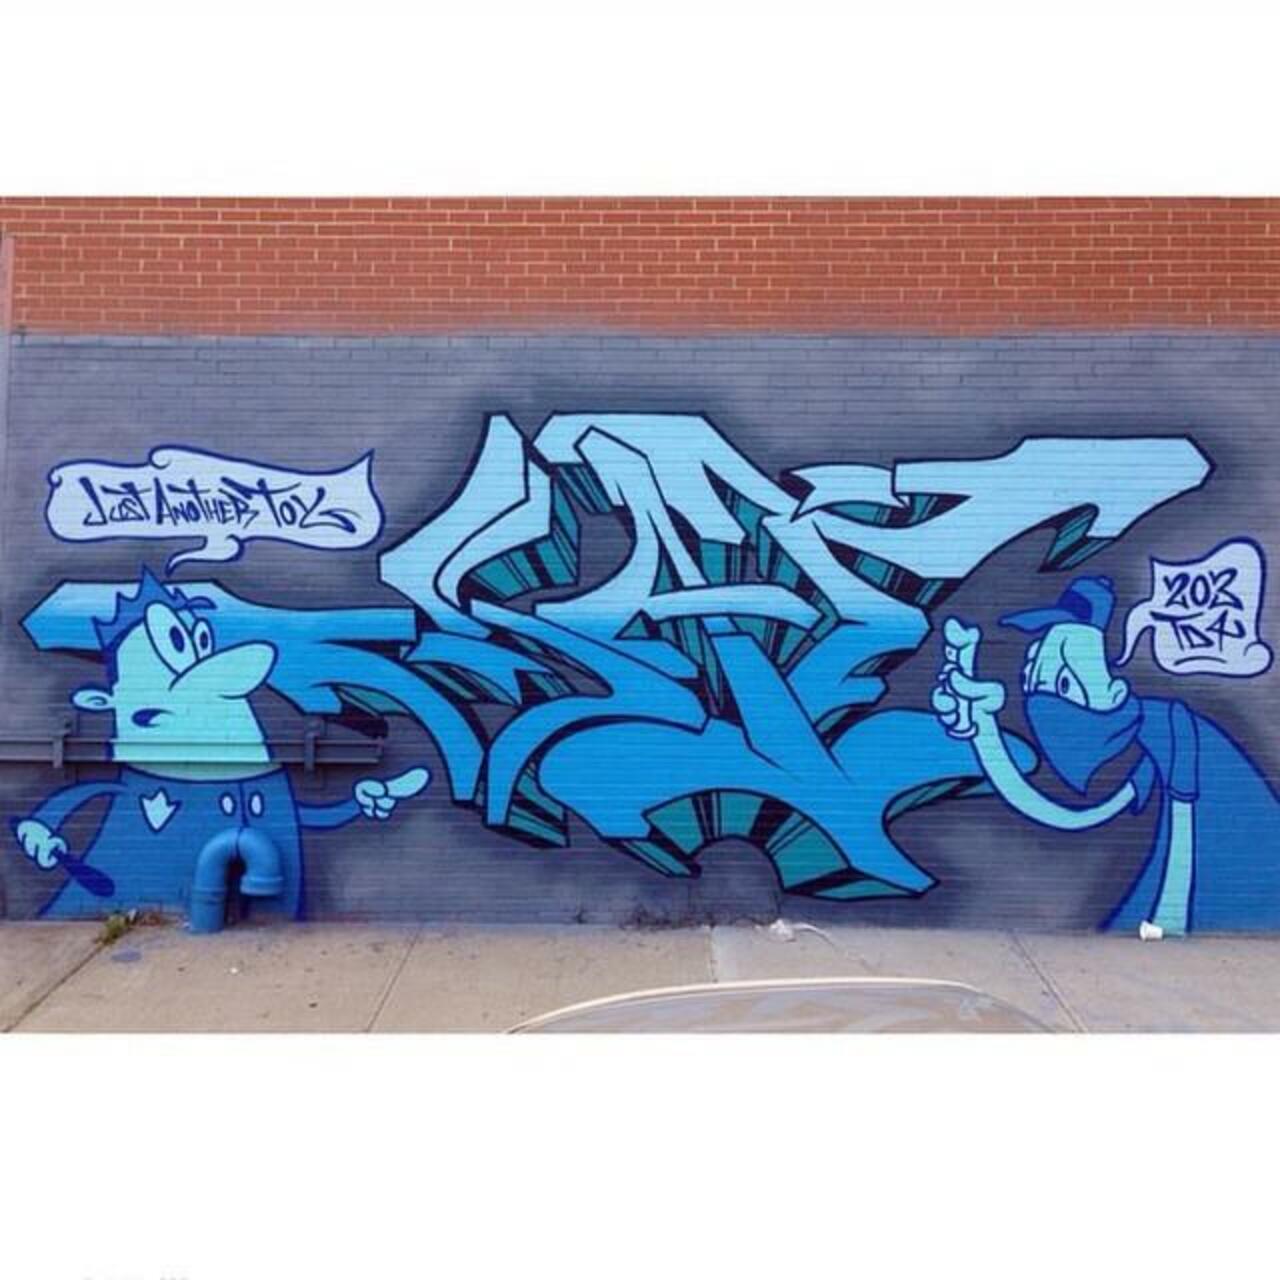 Repost from @lowbrow_bk newest piece in Bushwick. #graffiti #art #bushwick #brooklyn #newyork http://t.co/JqGqD9xlue